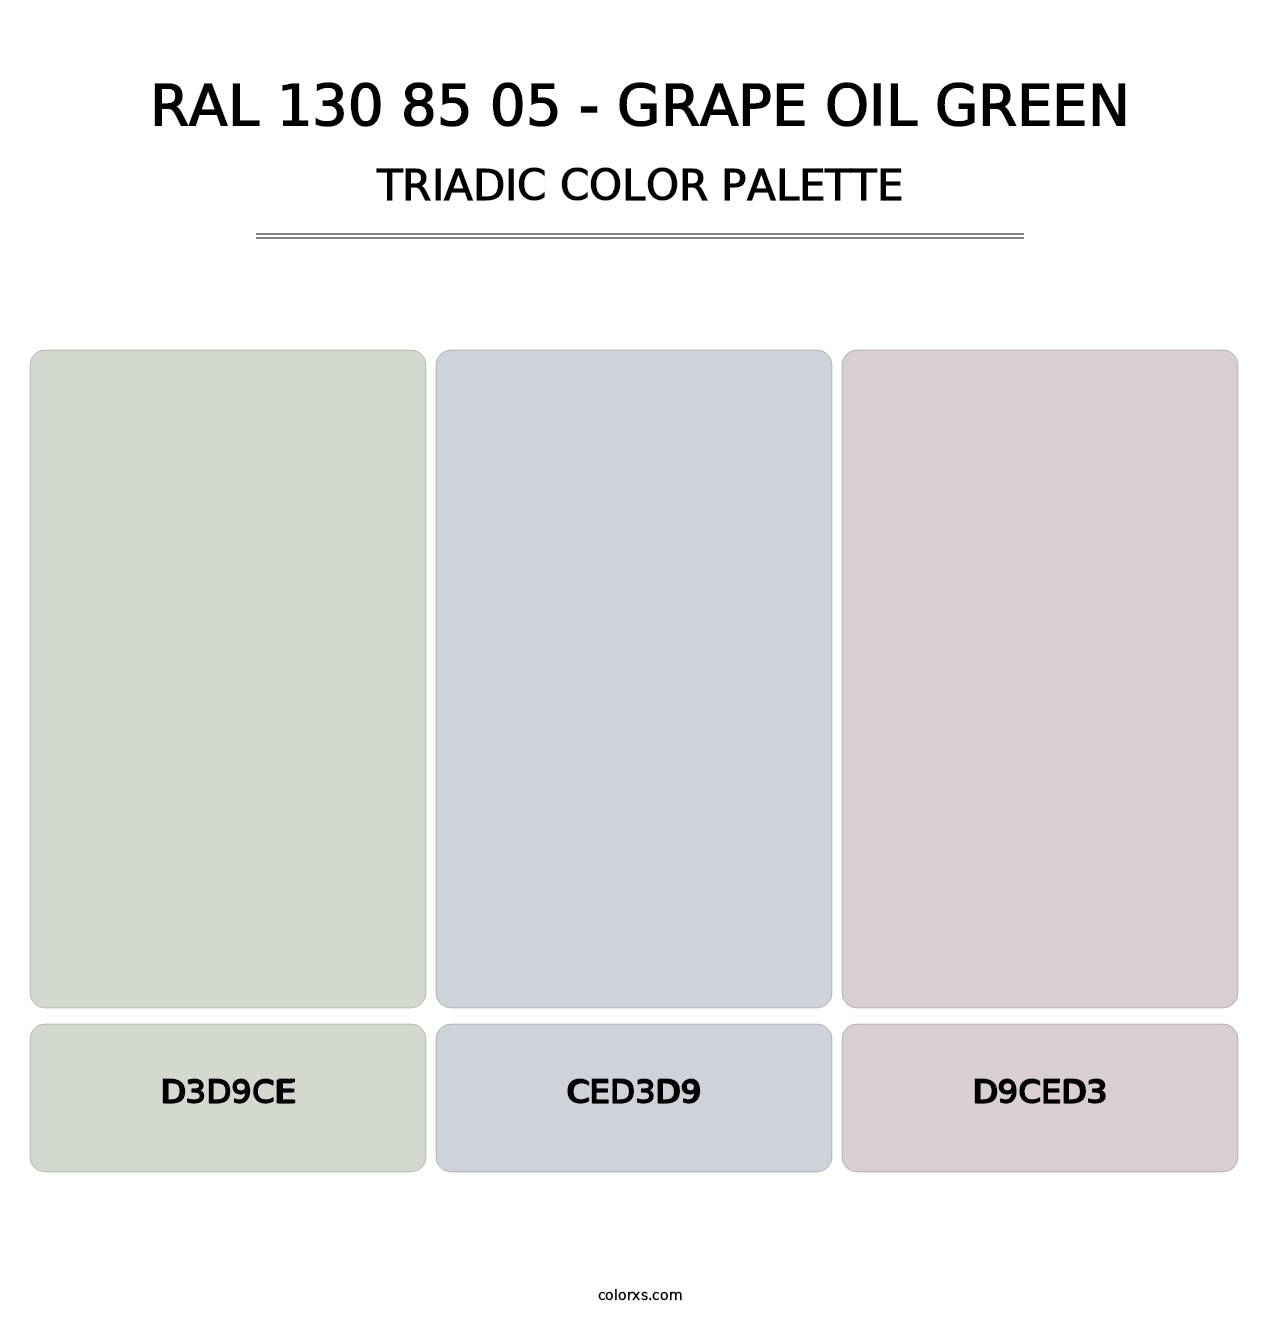 RAL 130 85 05 - Grape Oil Green - Triadic Color Palette